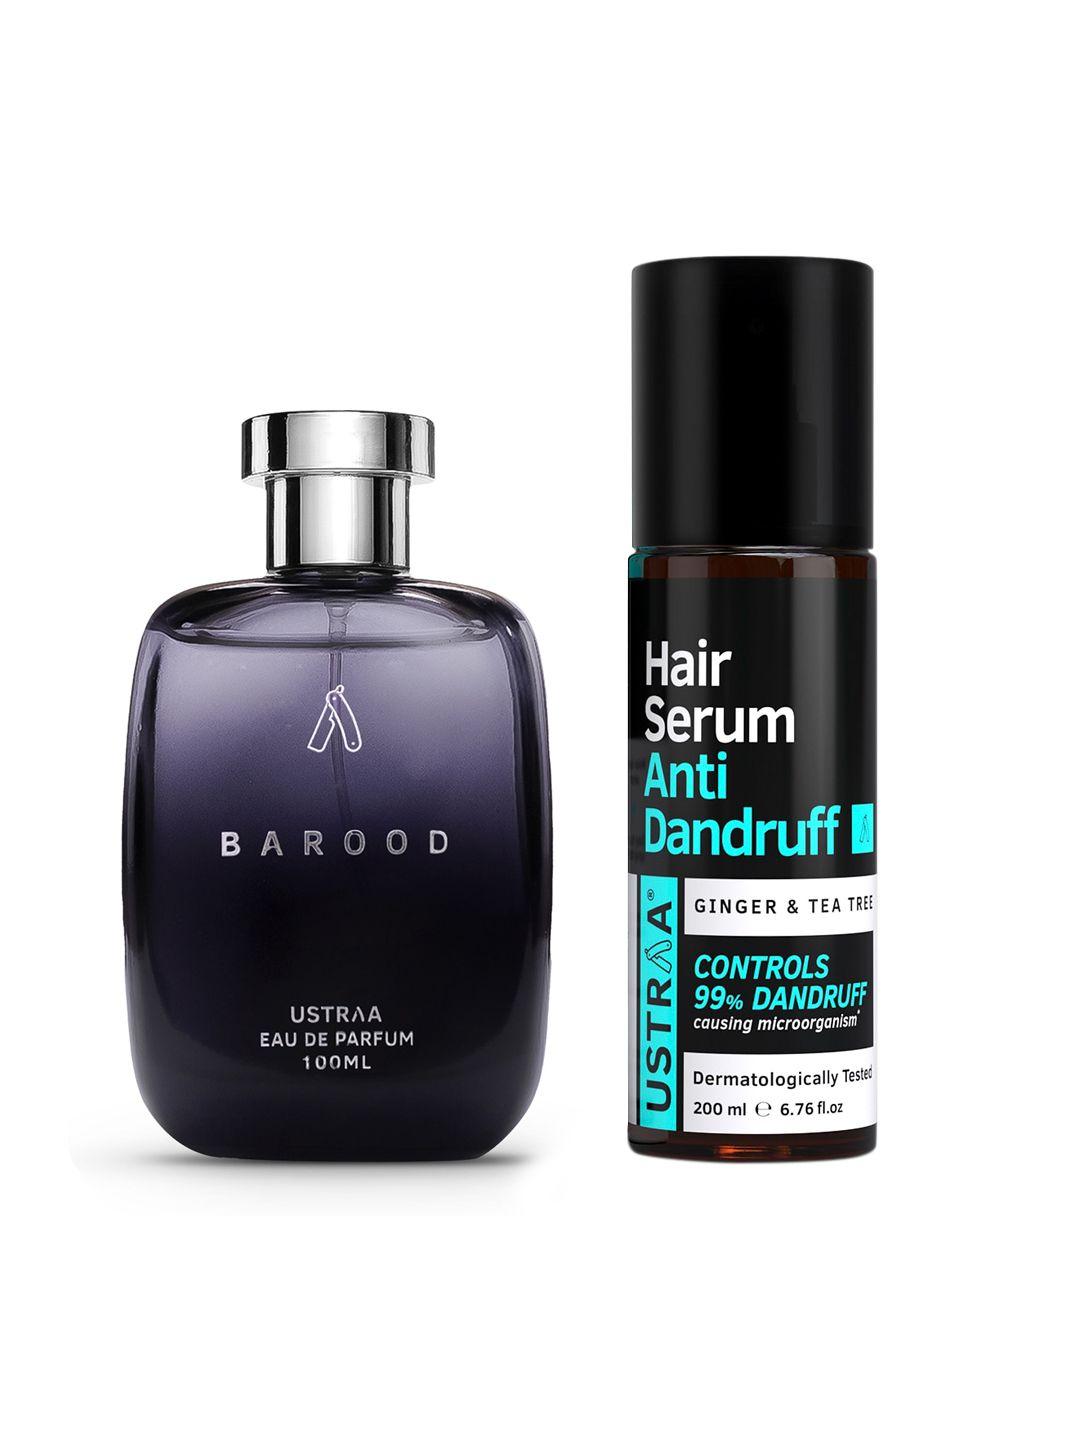 ustraa men set of anti-dandruff hair serum 200ml + barood eau de parfum 100 ml